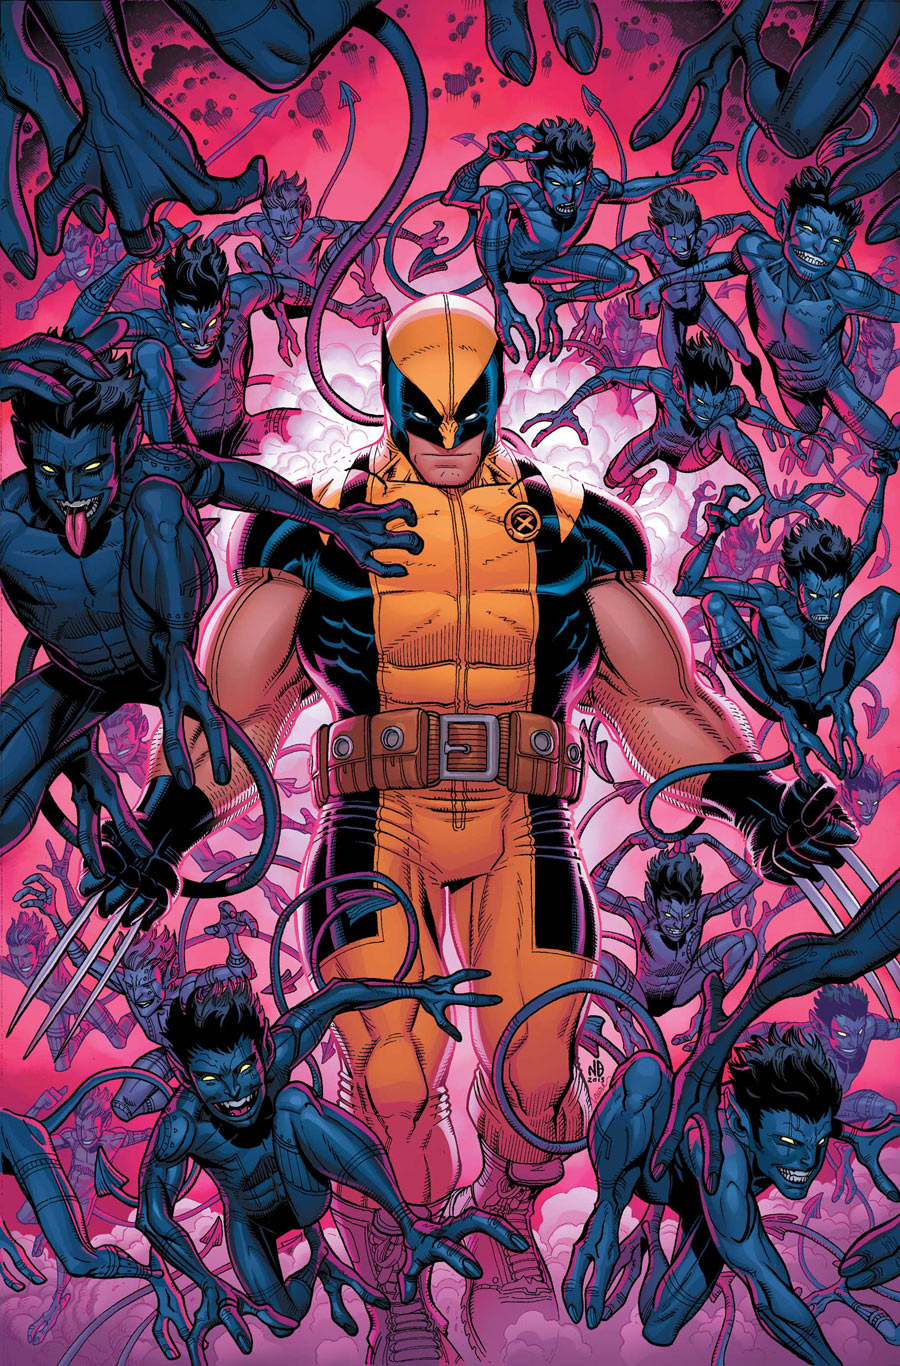 cqc9v7-Wolverine_and_the_X-Men__32__2013__by_Nick_Bradshaw-725t3wbv0gg31.jpg